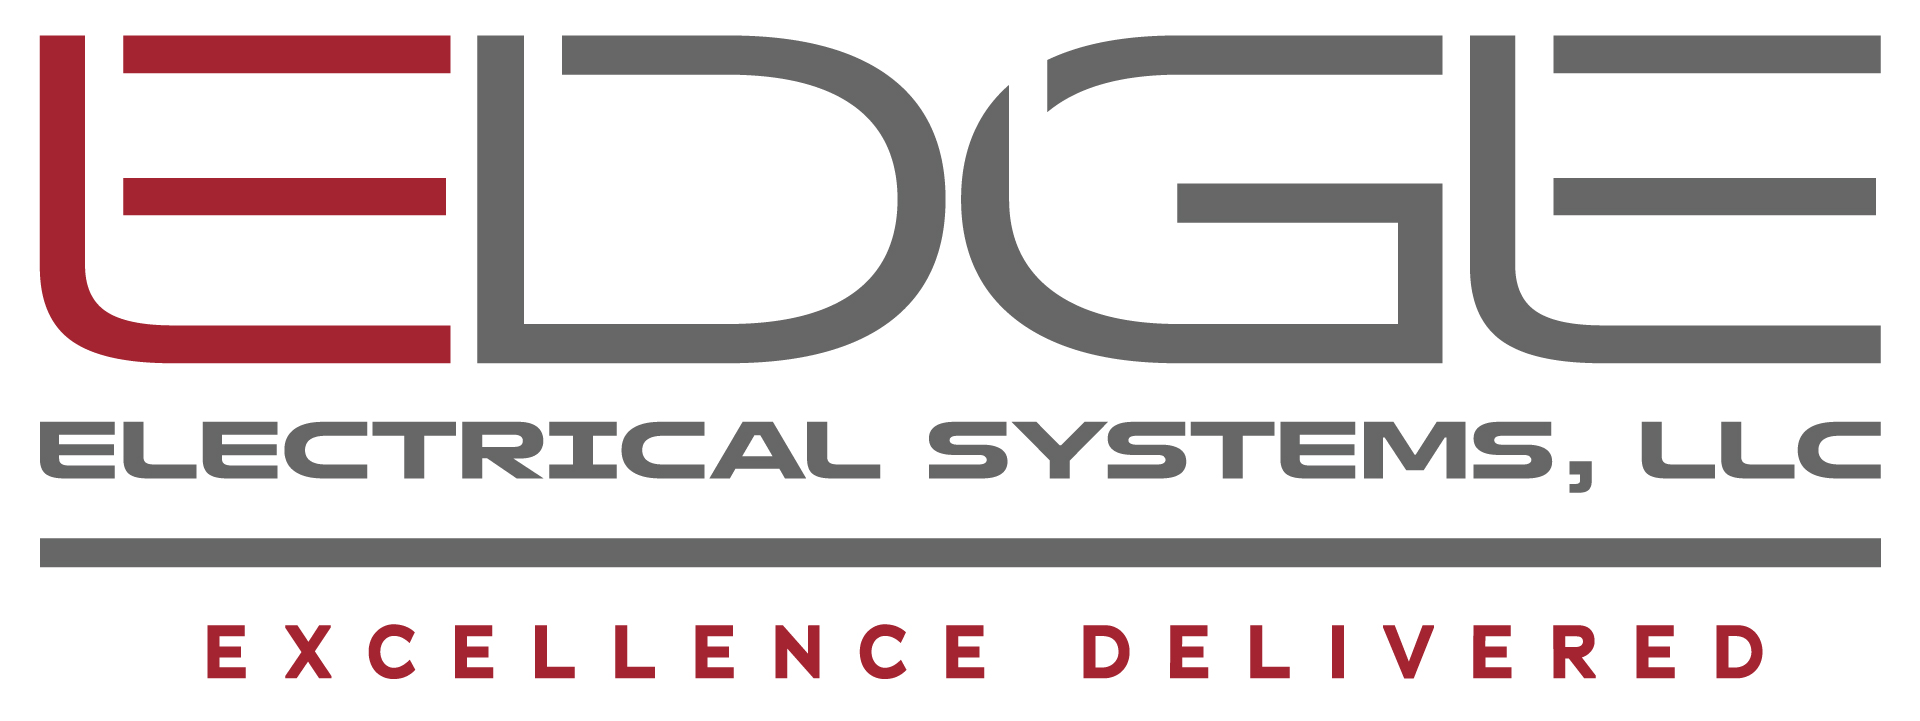 Edge Electrical Systems, LLC